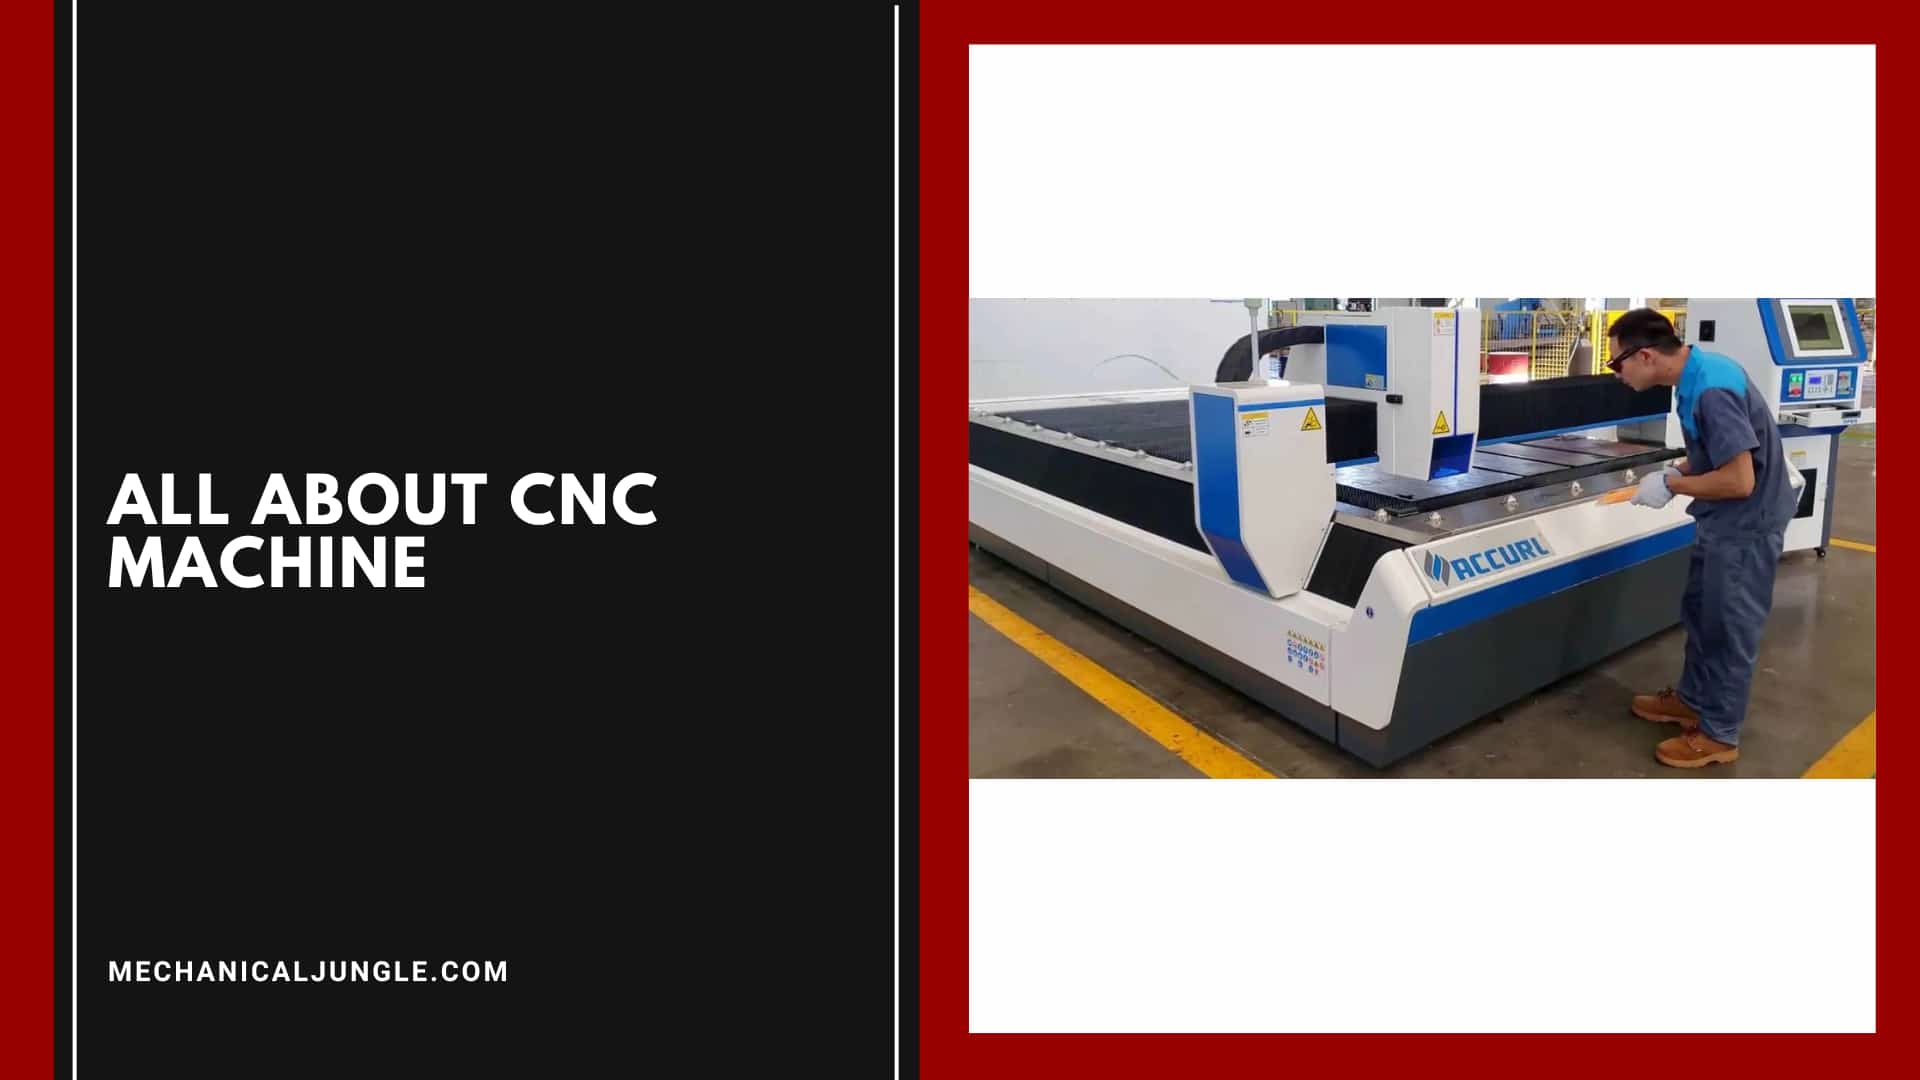 All About CNC Machine